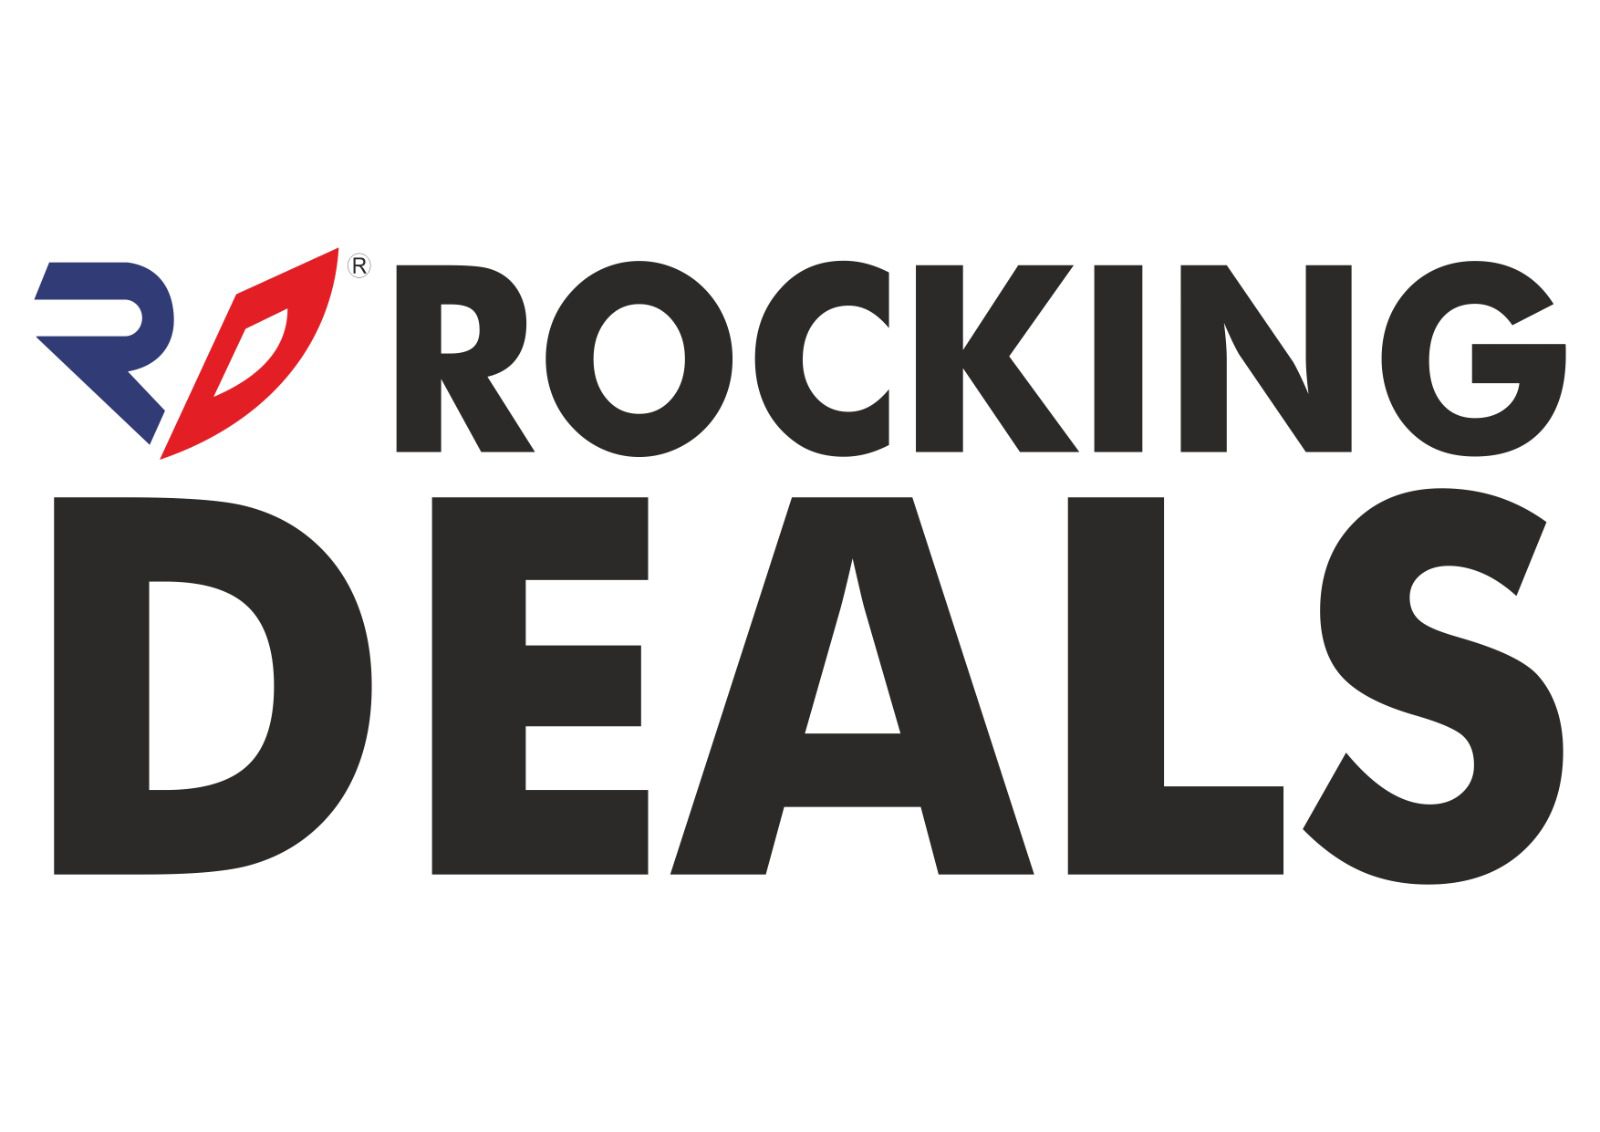 Rocking Deals